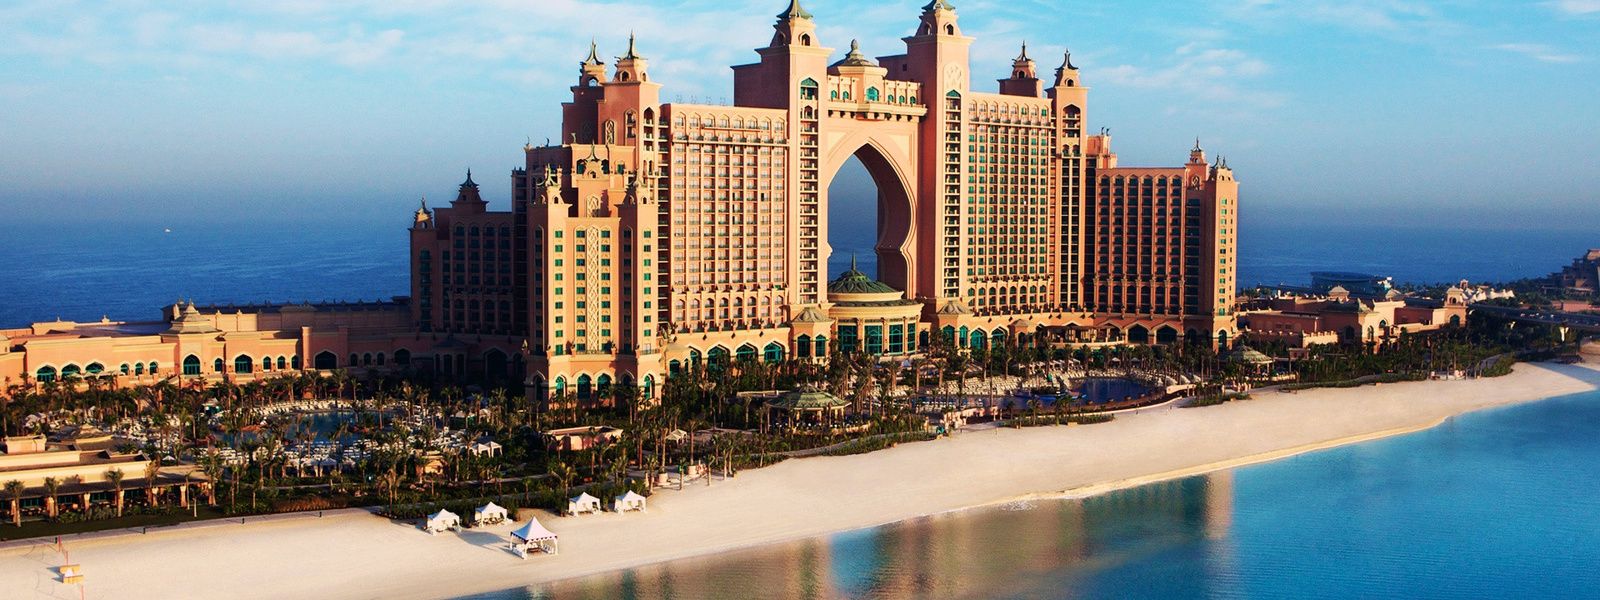 The wallpaper of Atlantis, majestic Dubai hotel situated on Palm Jumeirah